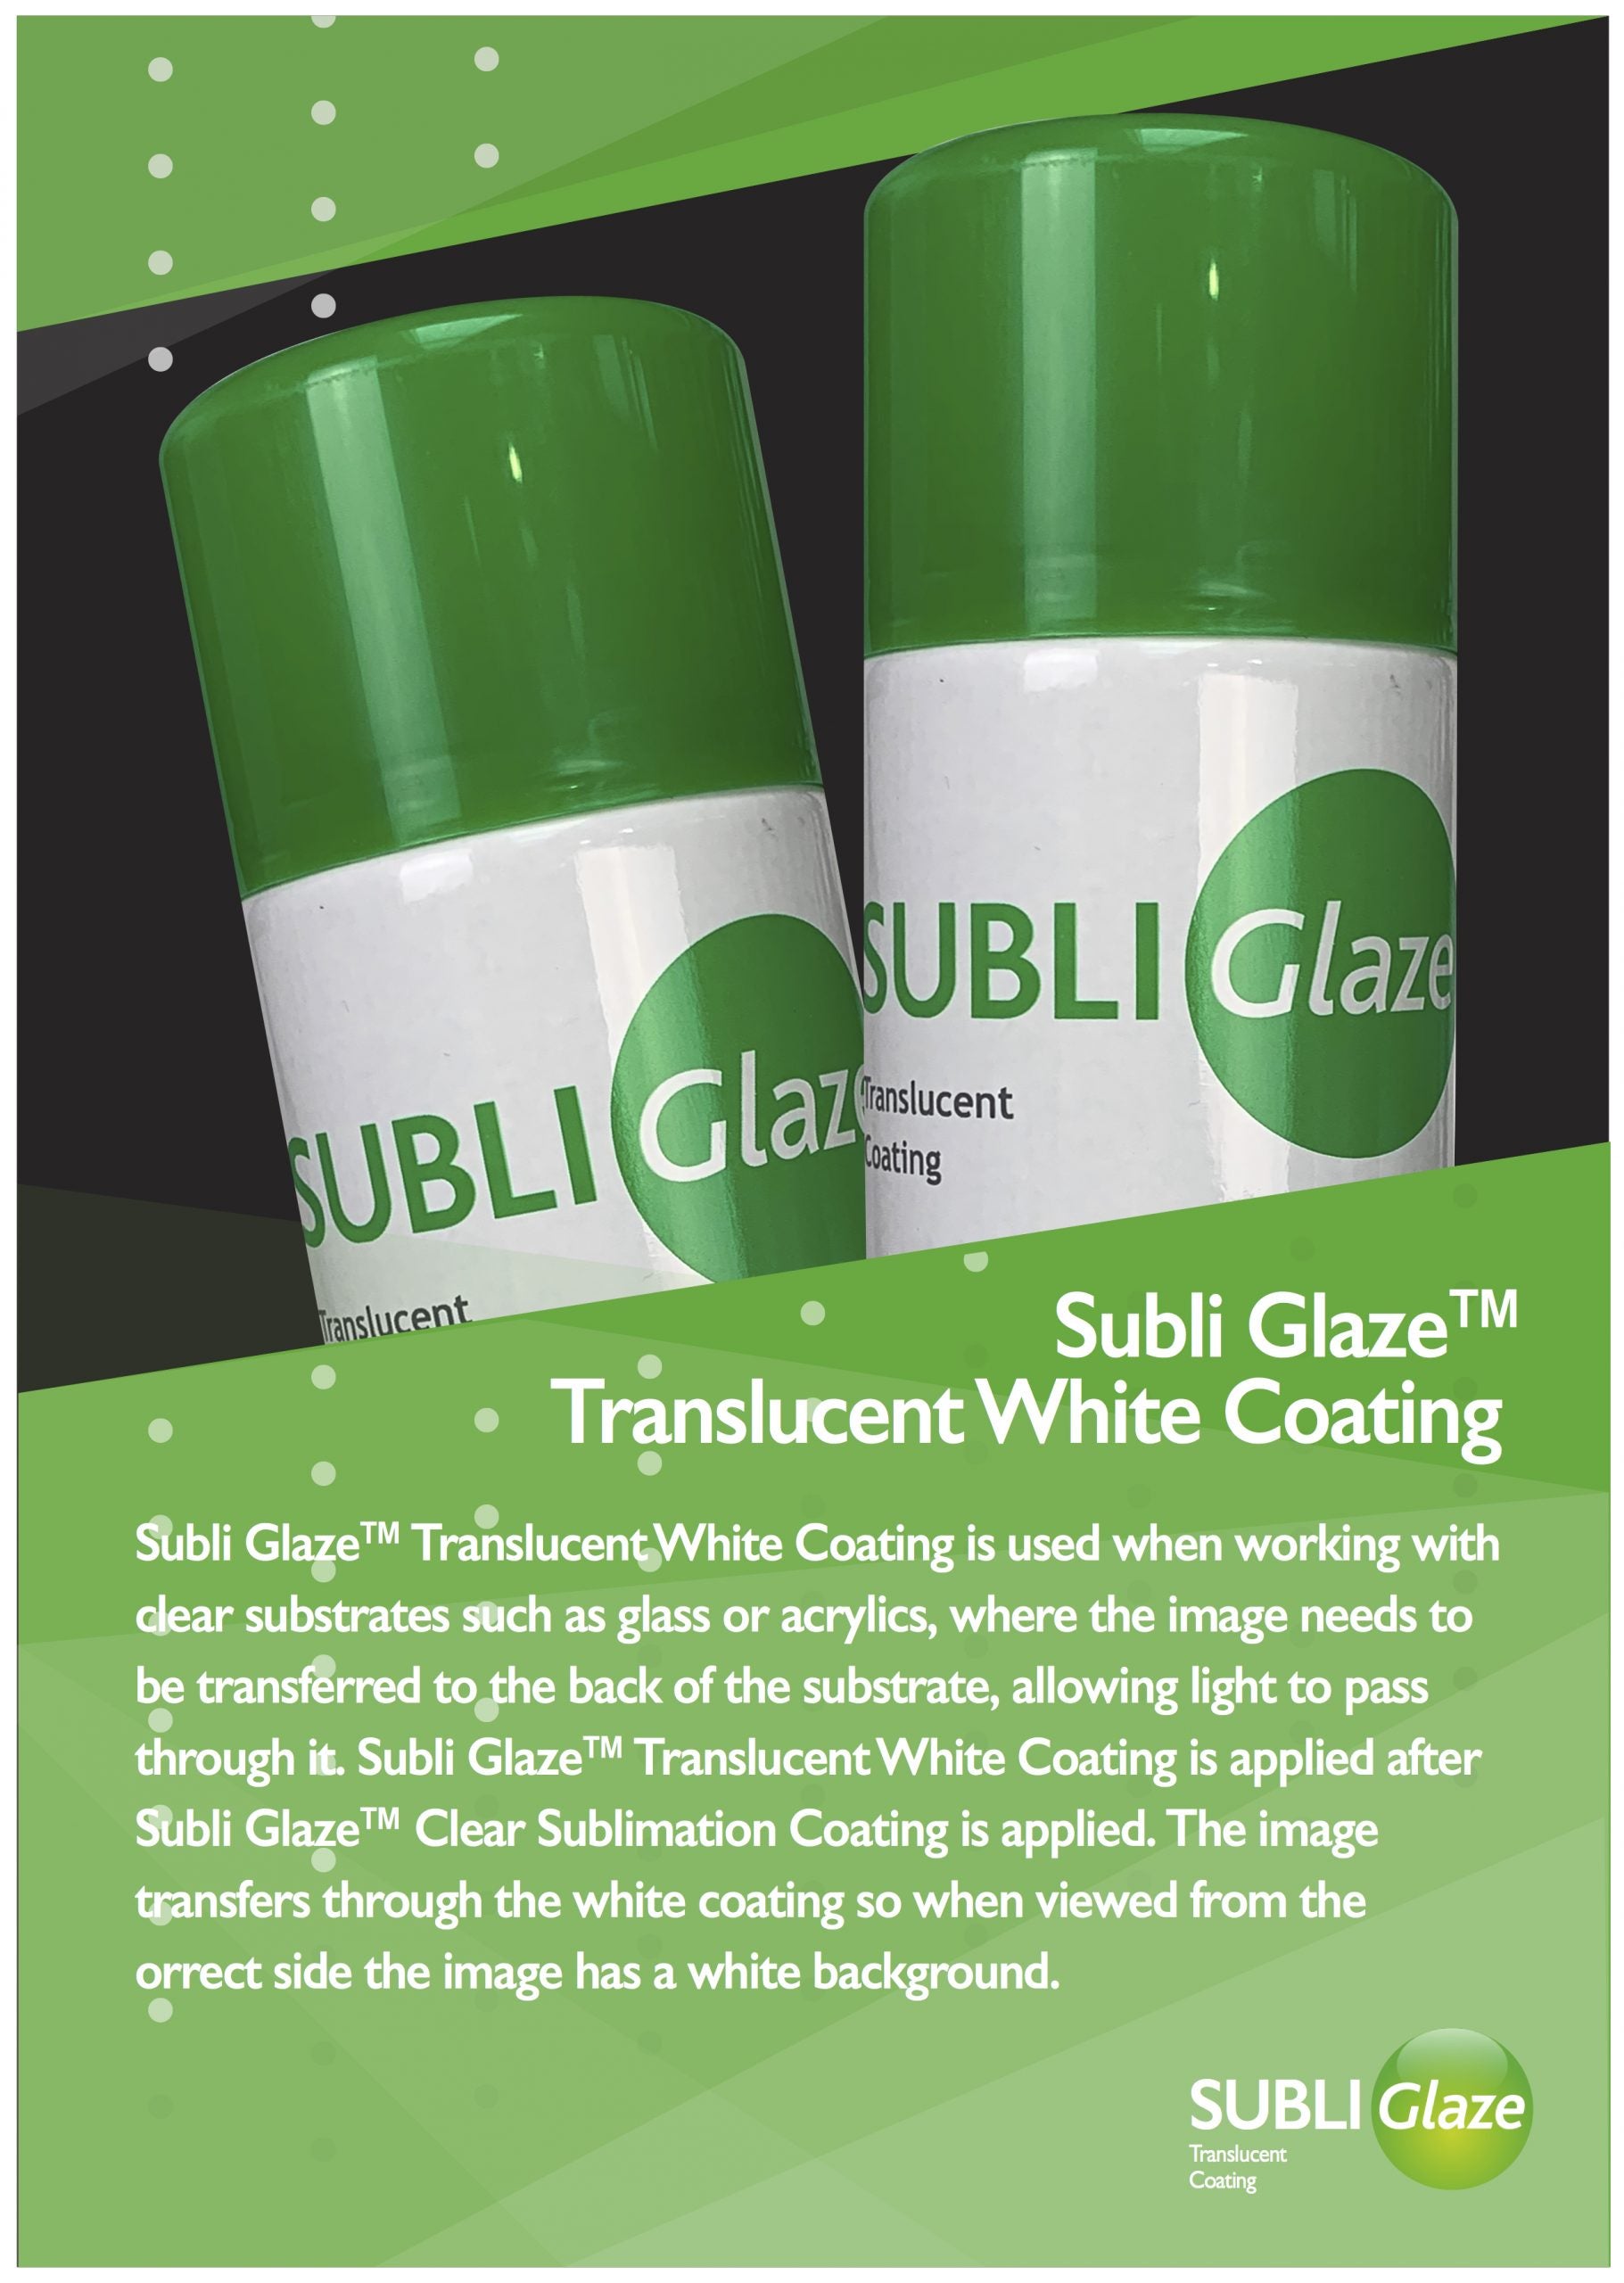 SubliGlaze sublimation clear matte Coating sublimation coating